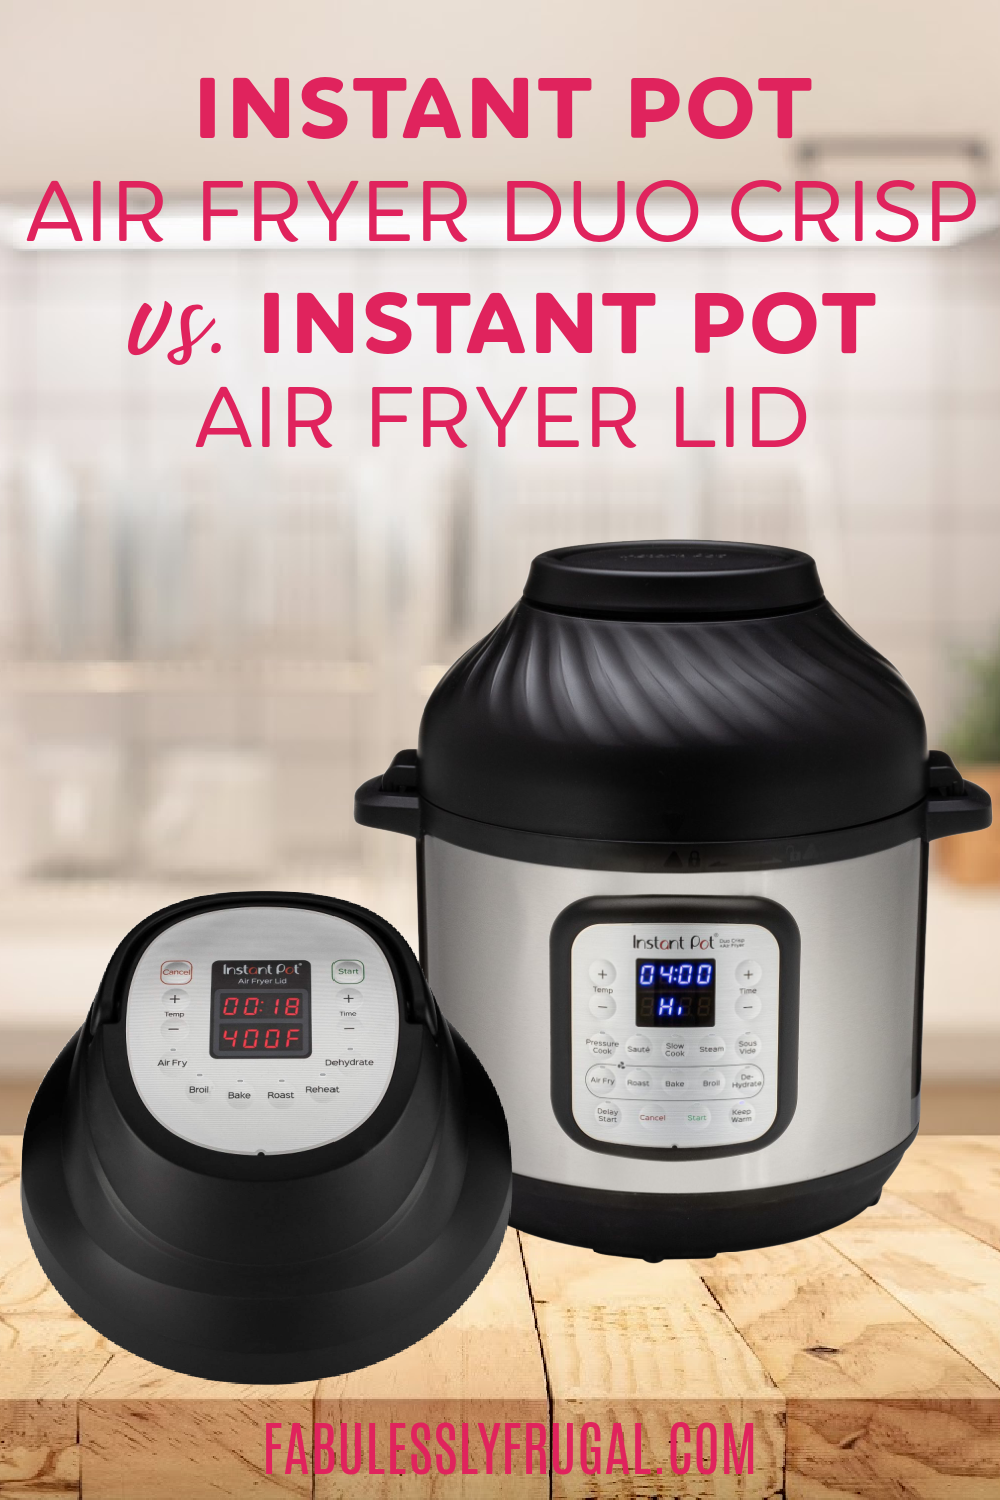 https://fabulesslyfrugal.com/wp-content/uploads/2021/02/instant-pot-air-fryer-duo-crisp-vs-instant-pot-air-fryer-lid-Pinterest-Pin.png